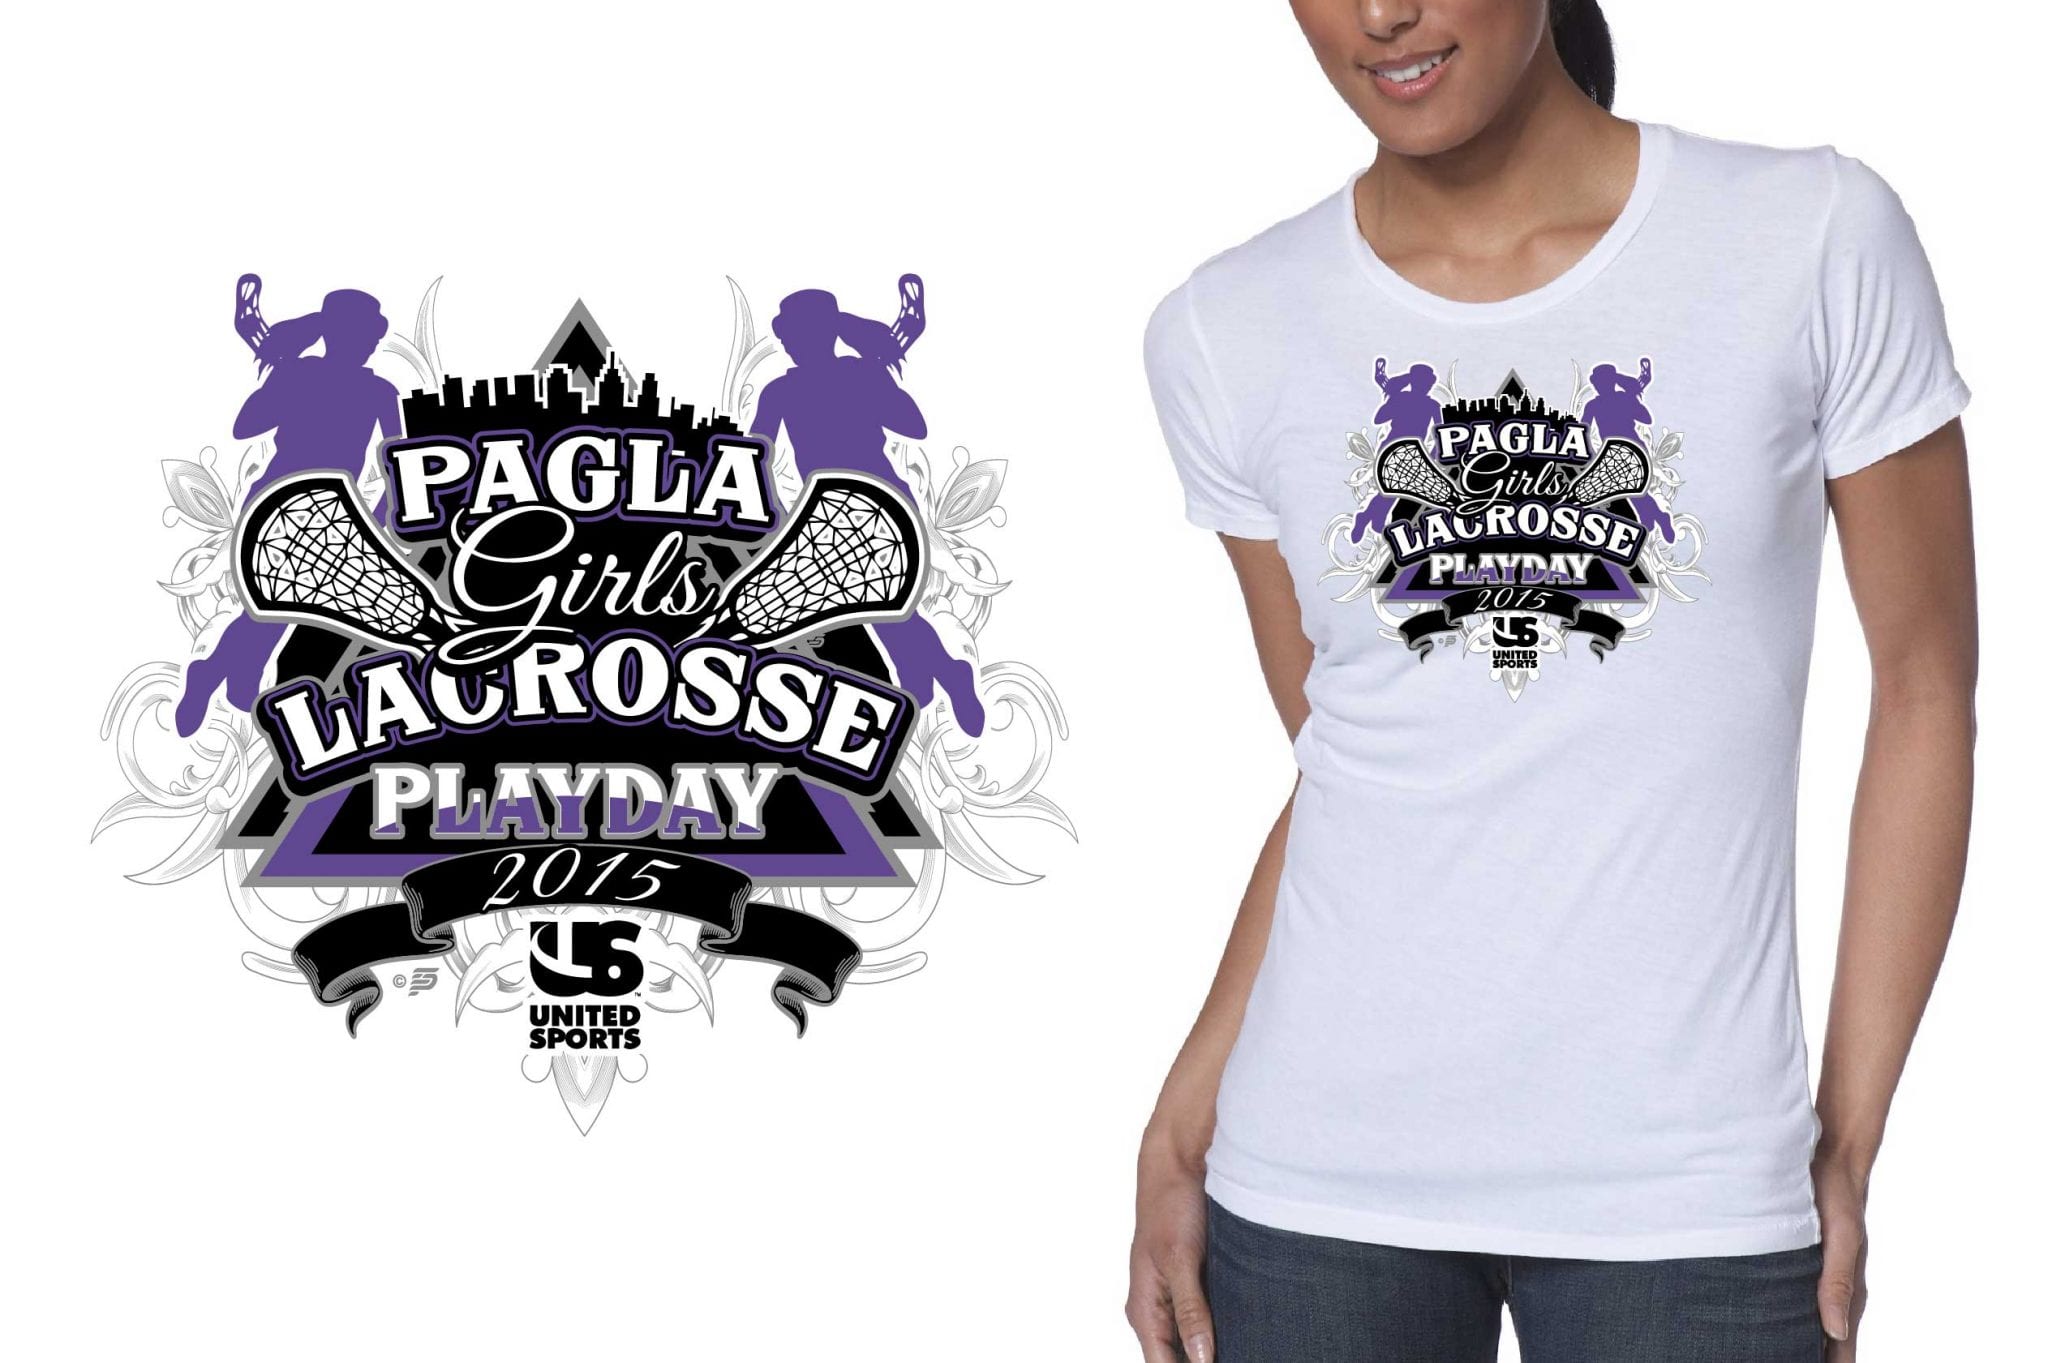 2015 PAGLA Girls Lacrosse Playday creative logo design for tshirt